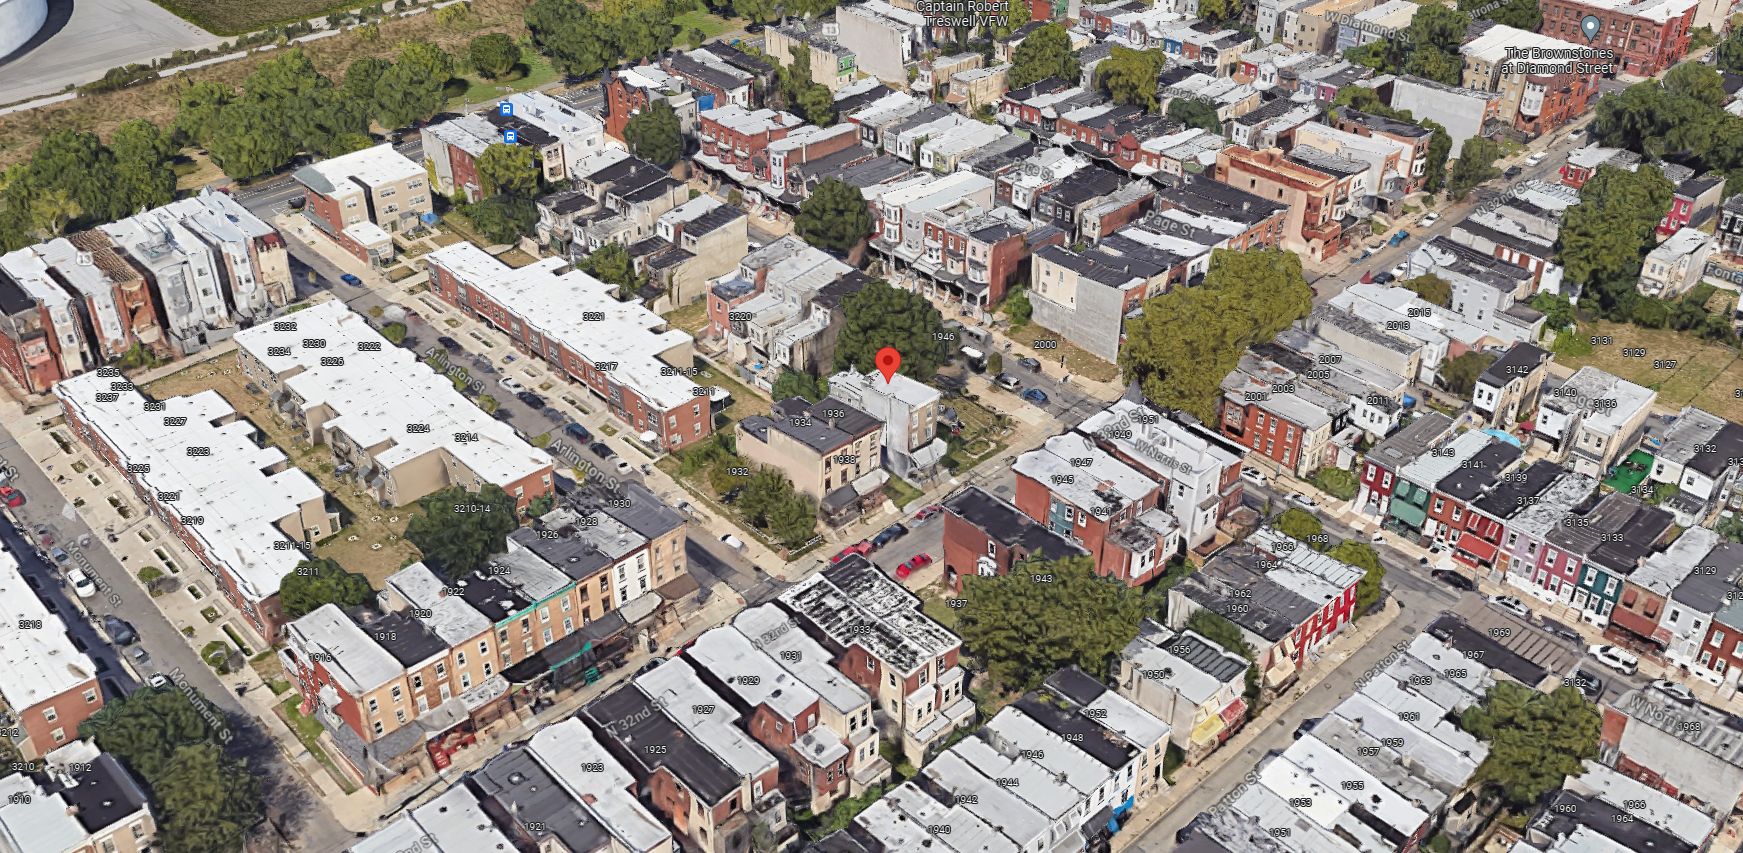 1942 North 32nd Street. Aerial view prior to redevelopment. Looking northwest. Credit: Google Maps